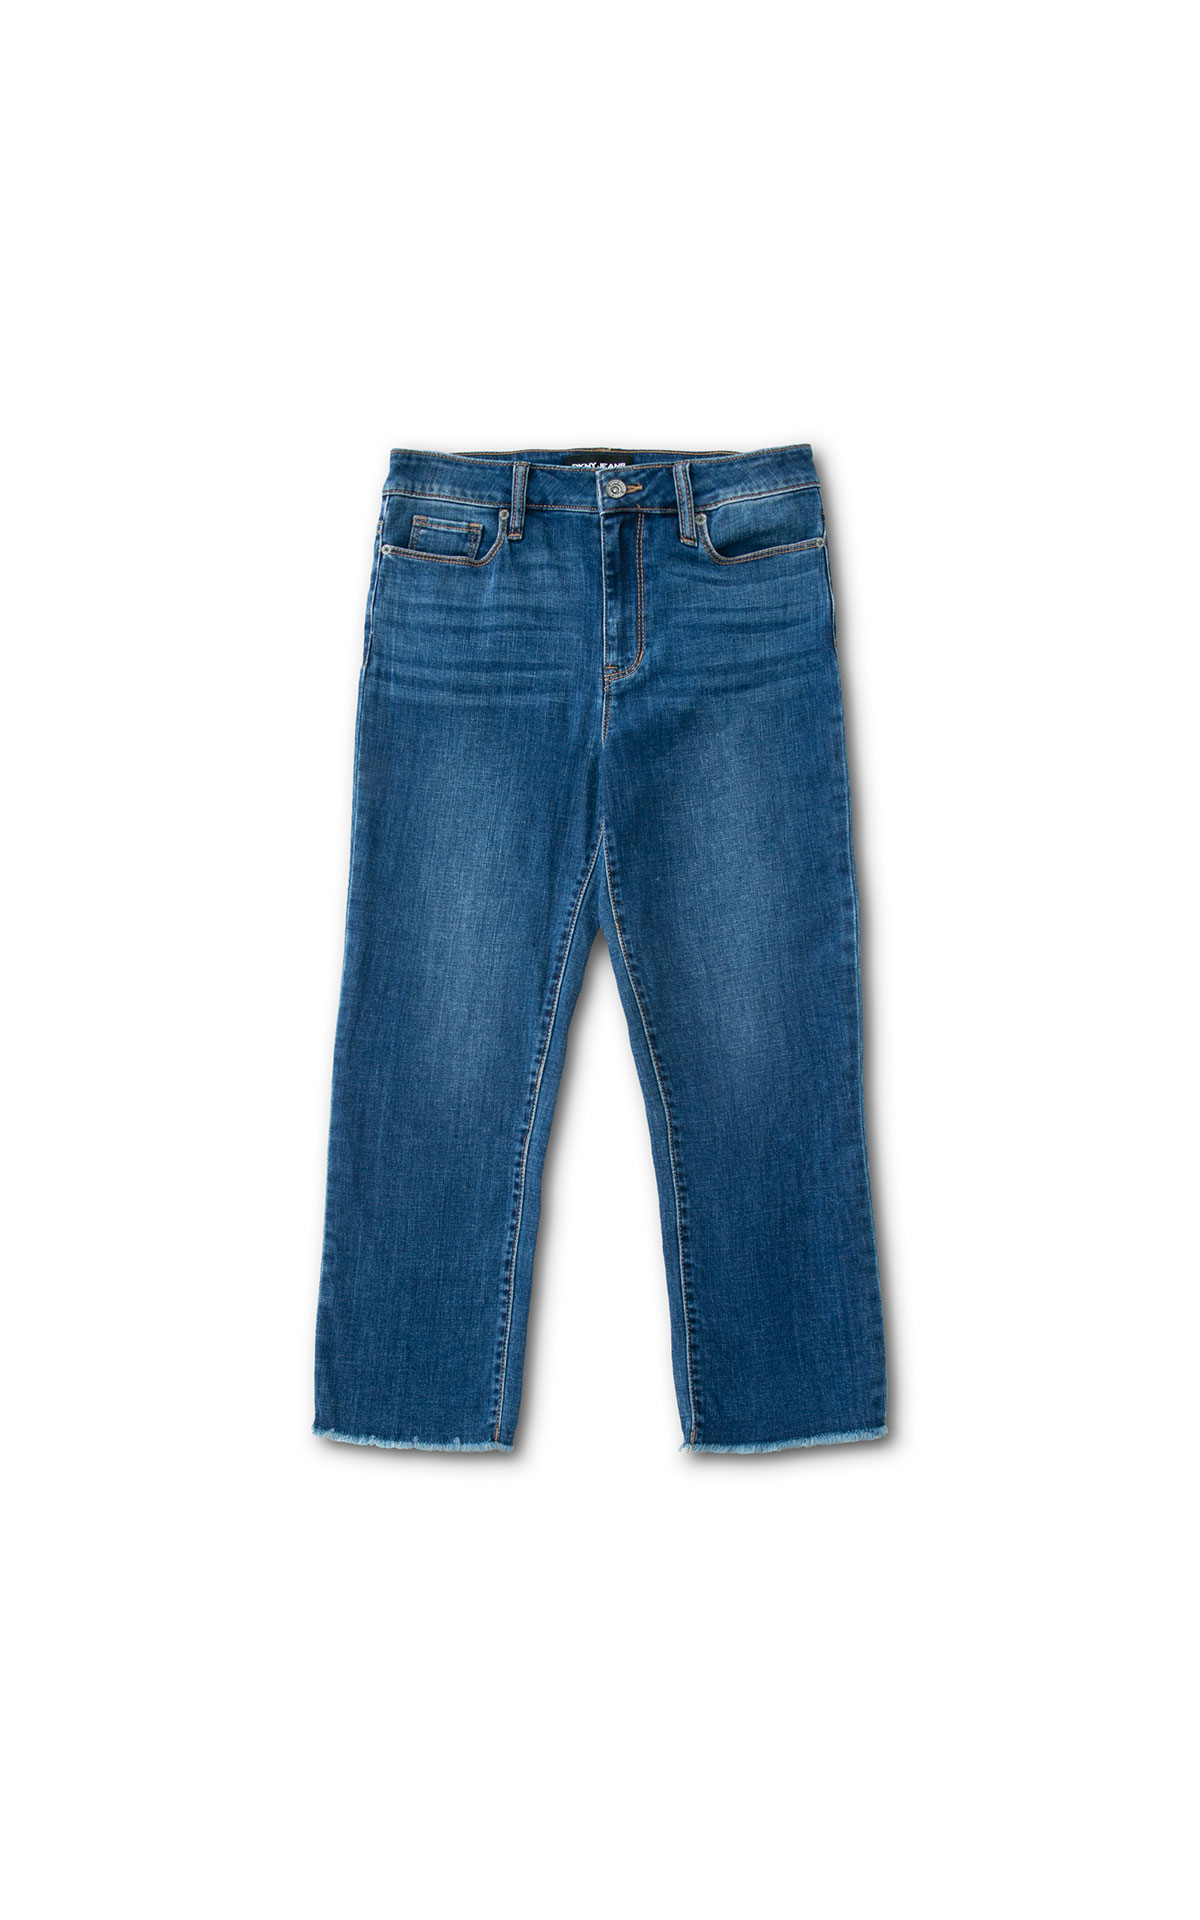 DKNY Denim jeans from Bicester Village